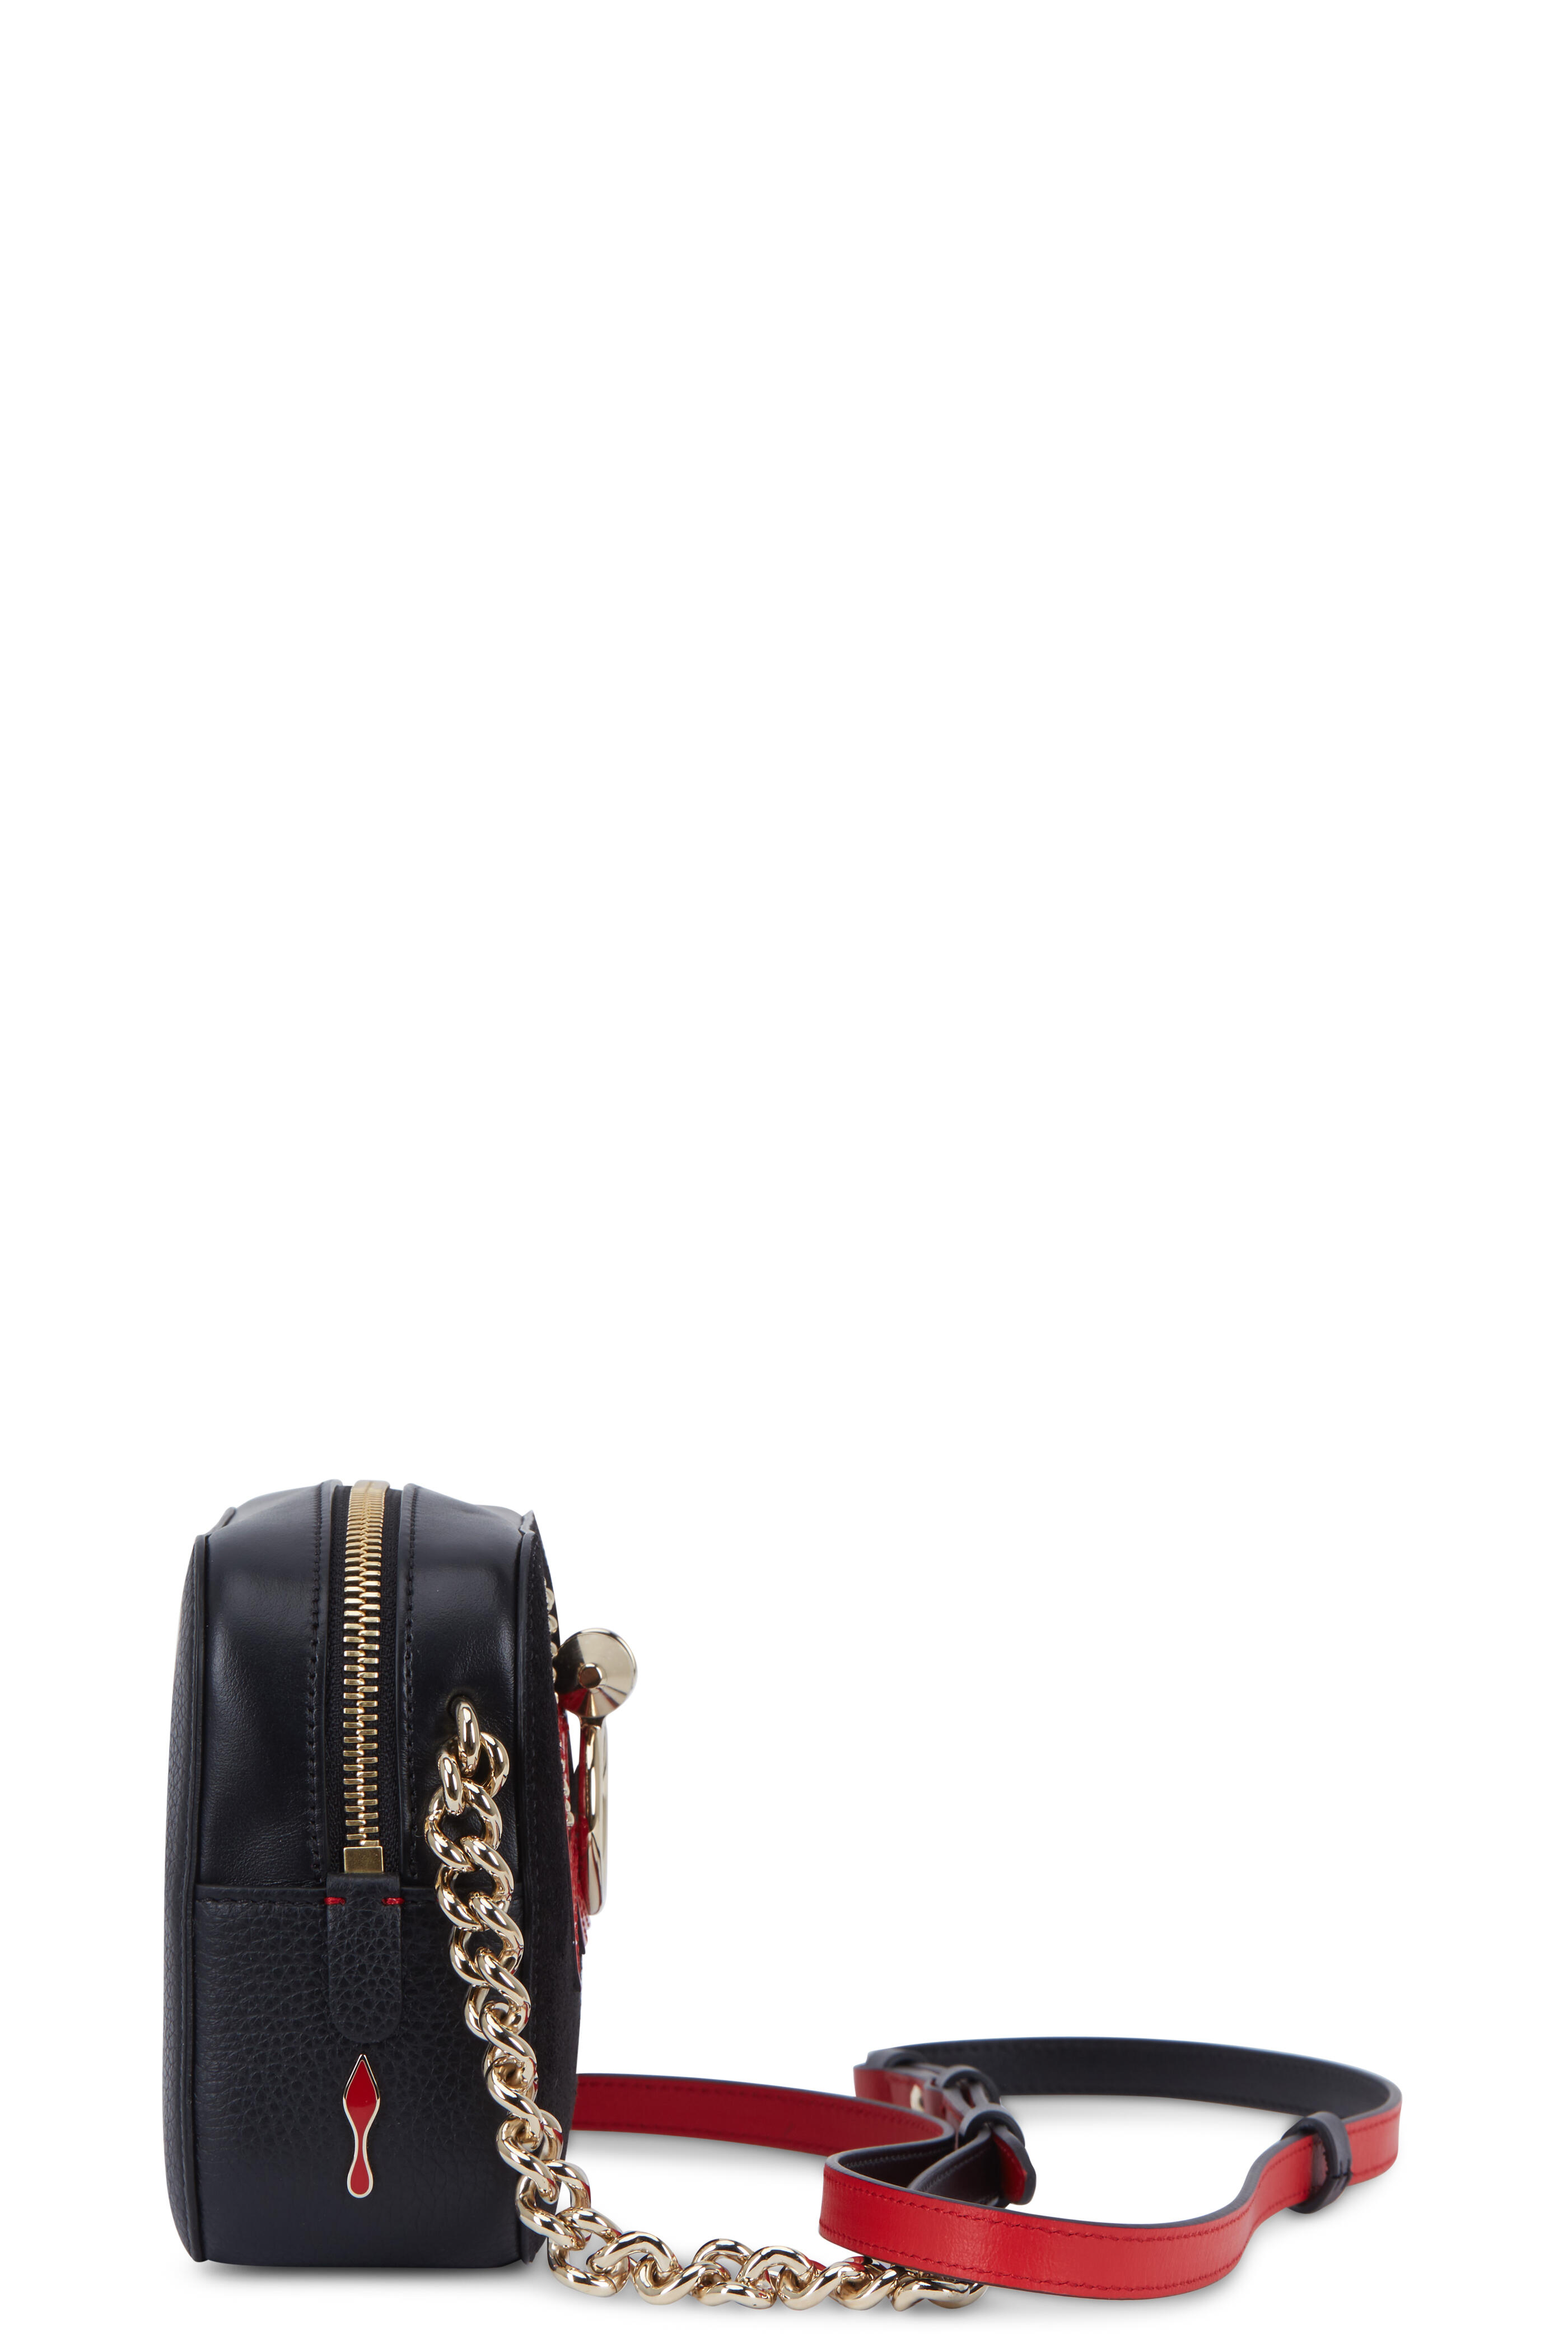 Christian Louboutin - RubyLou Black & Red Leather LOVE Mini Bag